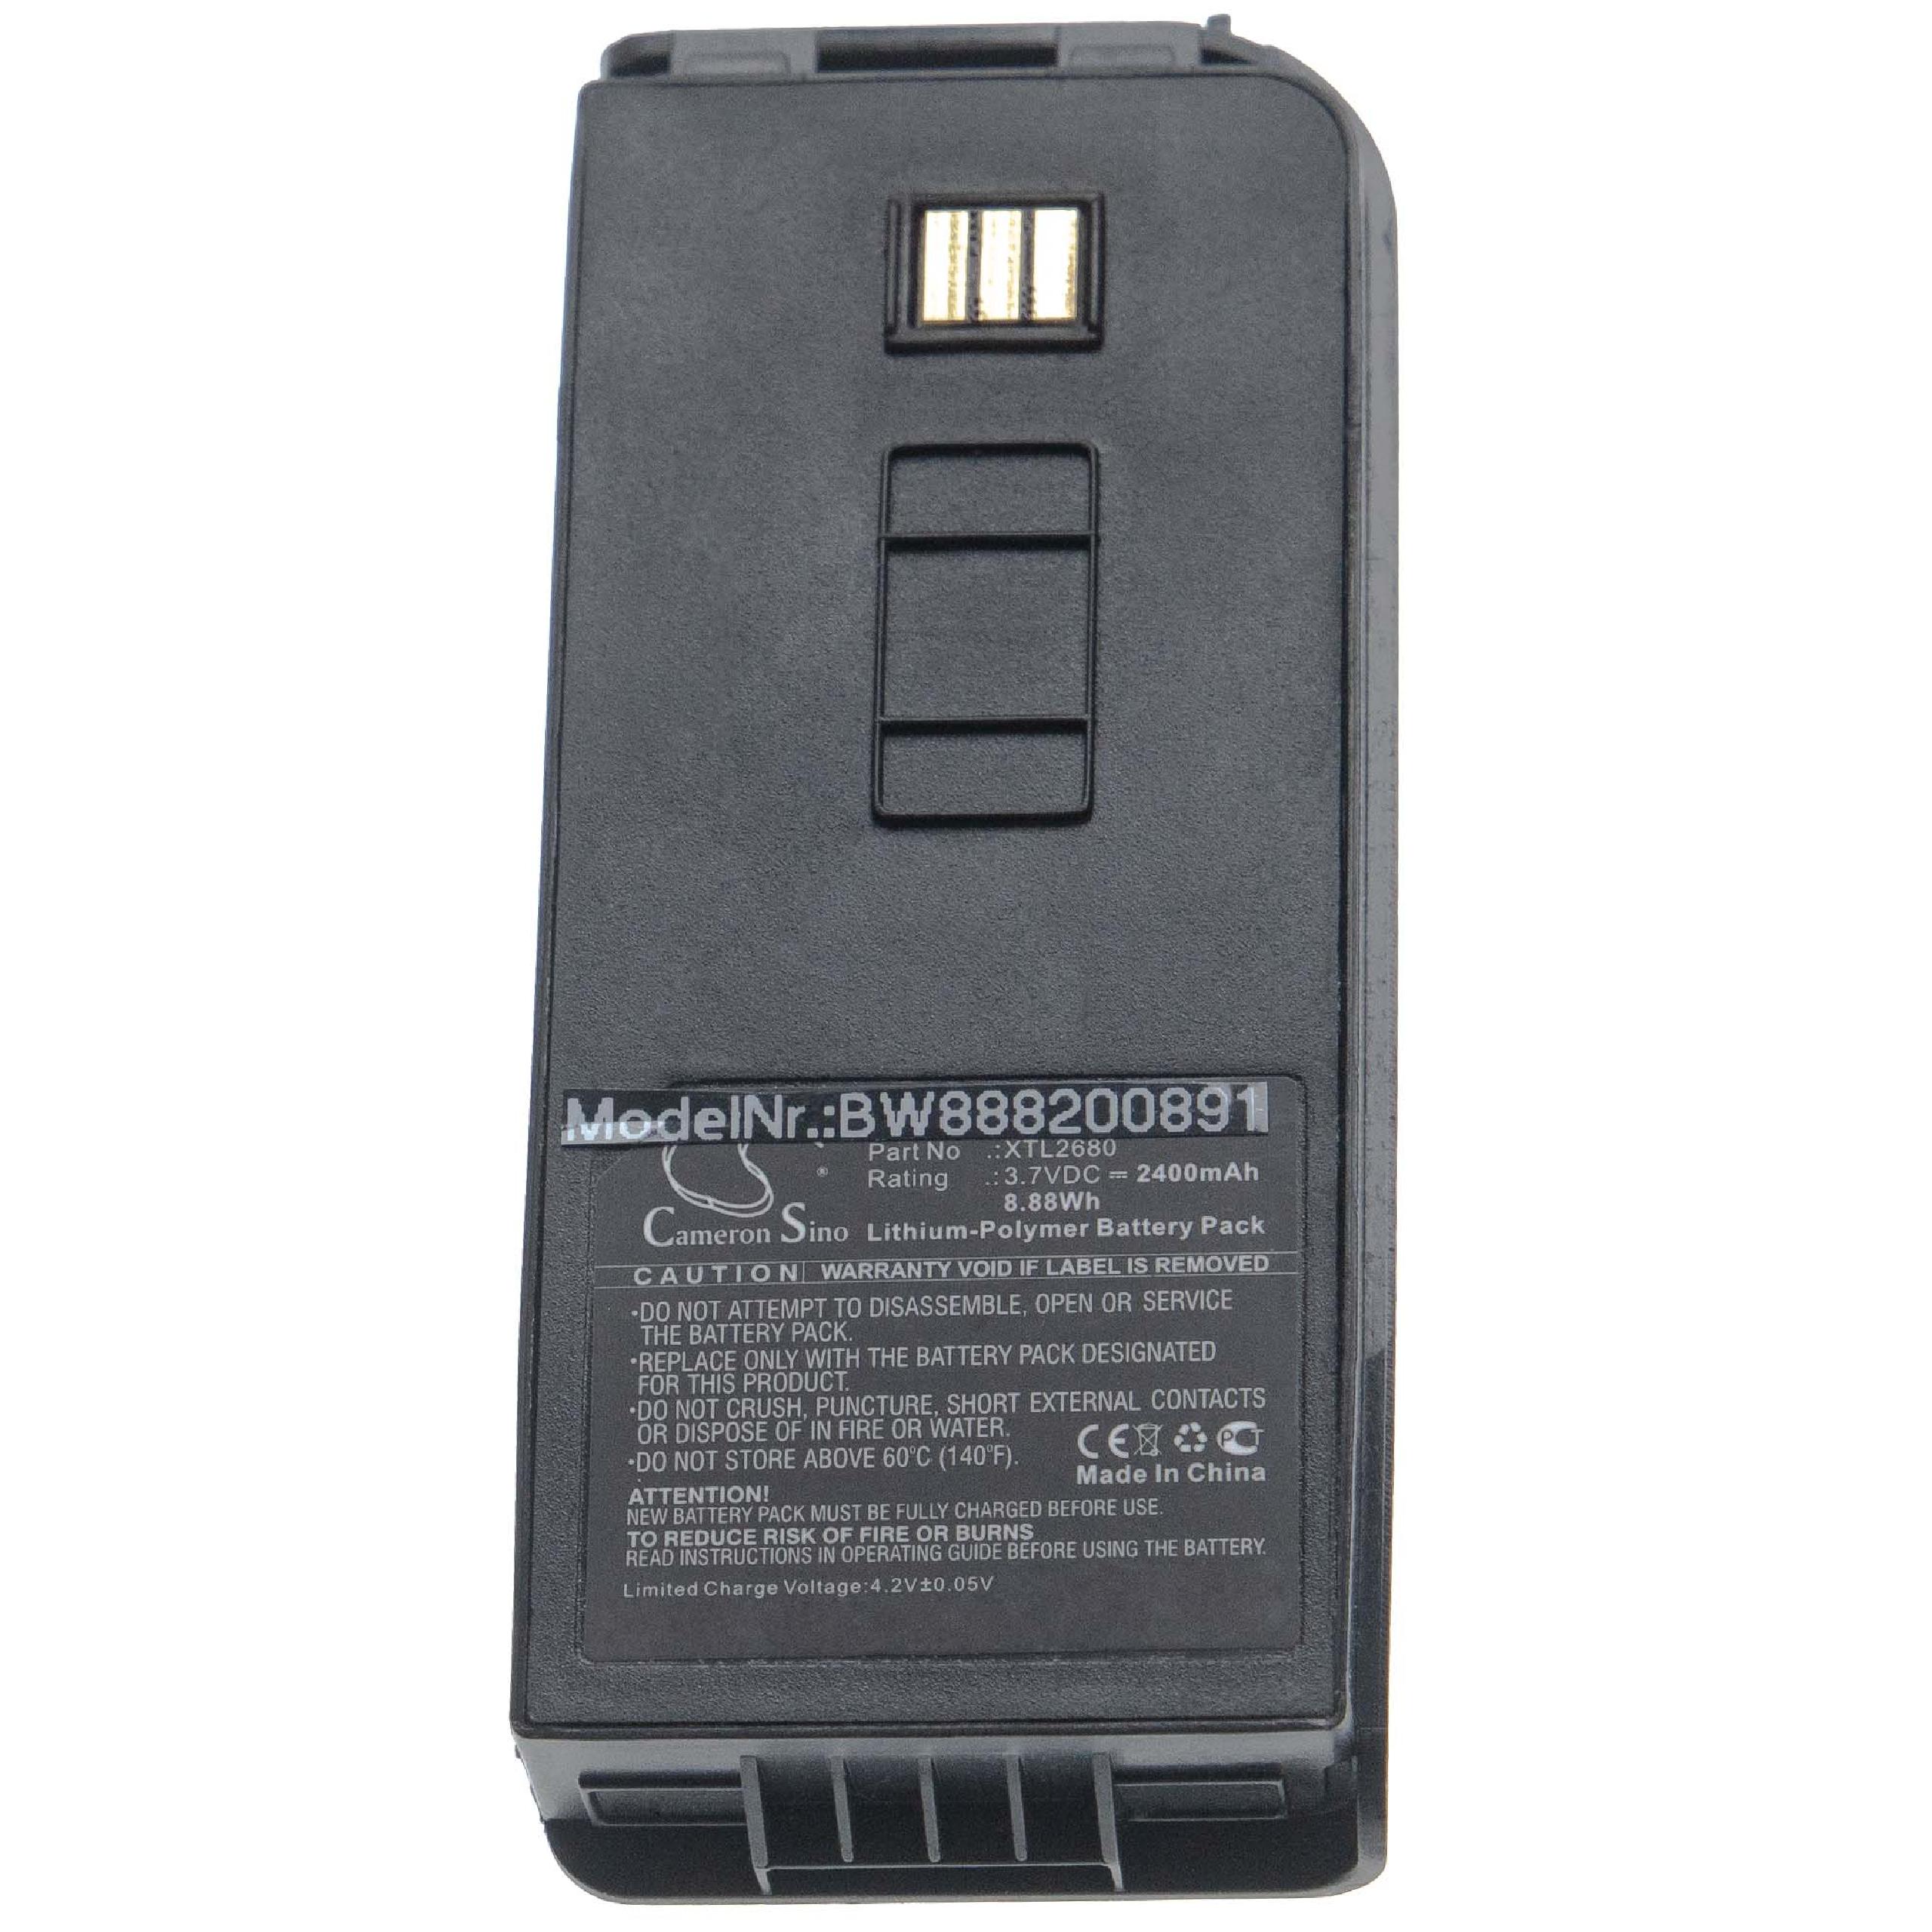 Satellite Mobile Phone Battery Replacement for Thuraya XTL2680 - 2400mAh 3.7V Li-polymer